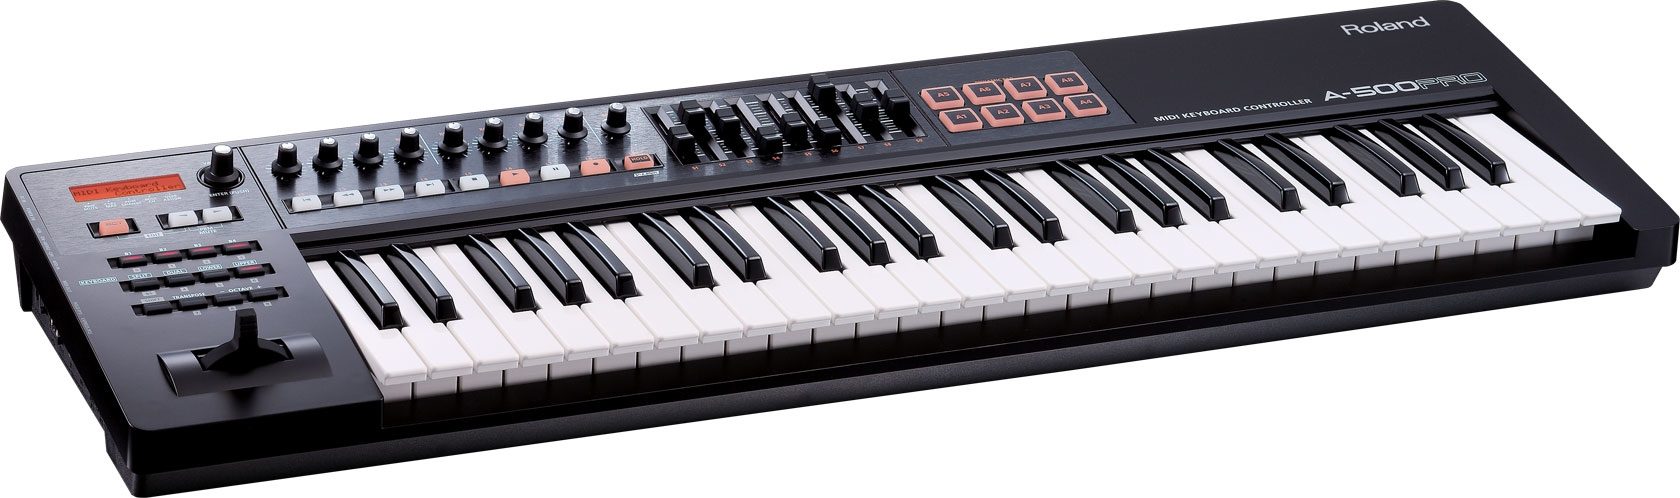 Roland A-500 PRO MIDIキーボード 鍵盤 49鍵盤